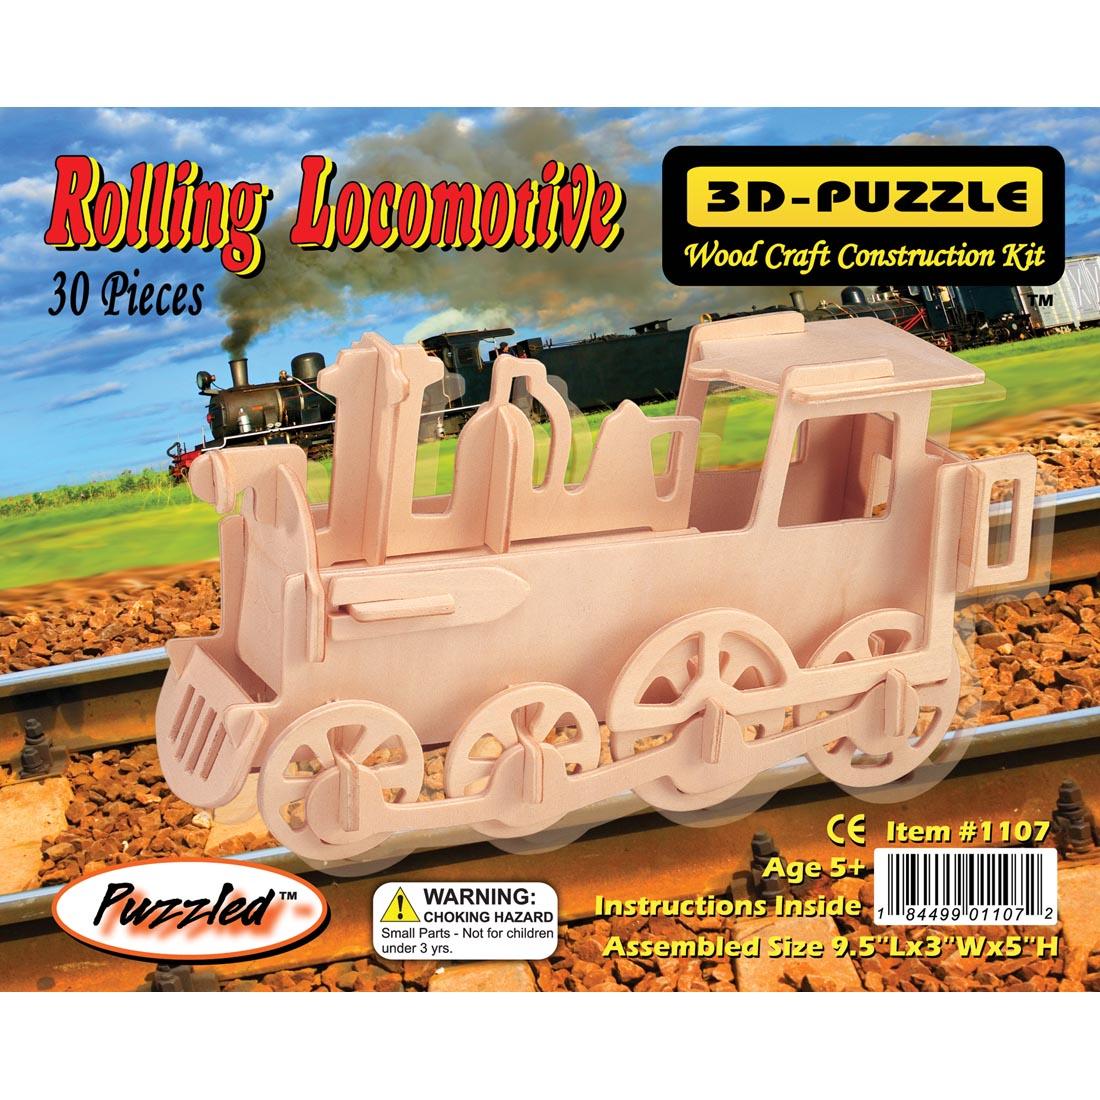 Rolling Locomotive 3D Wooden Puzzle